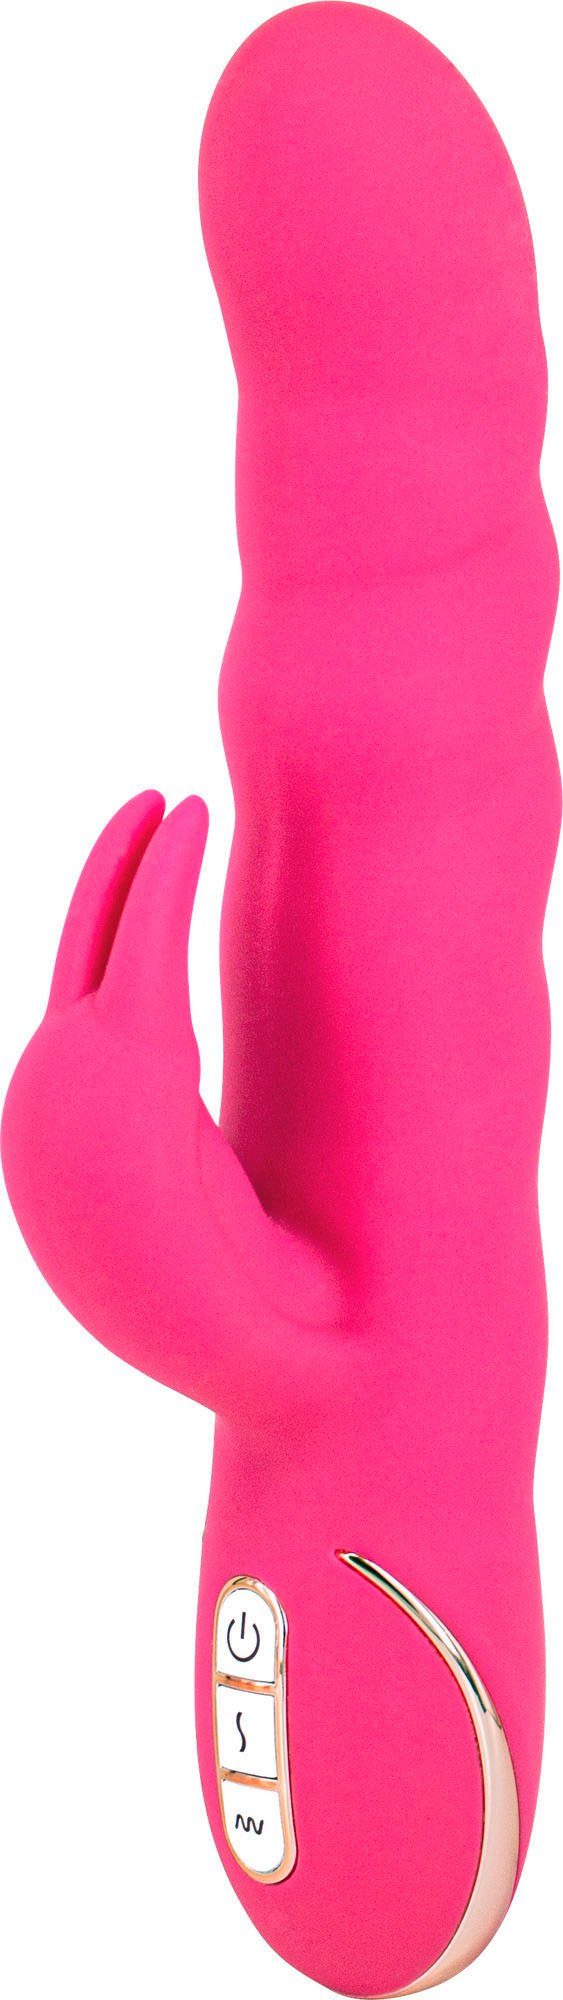 Vibe Couture Rabbit-Vibrator Entice pink